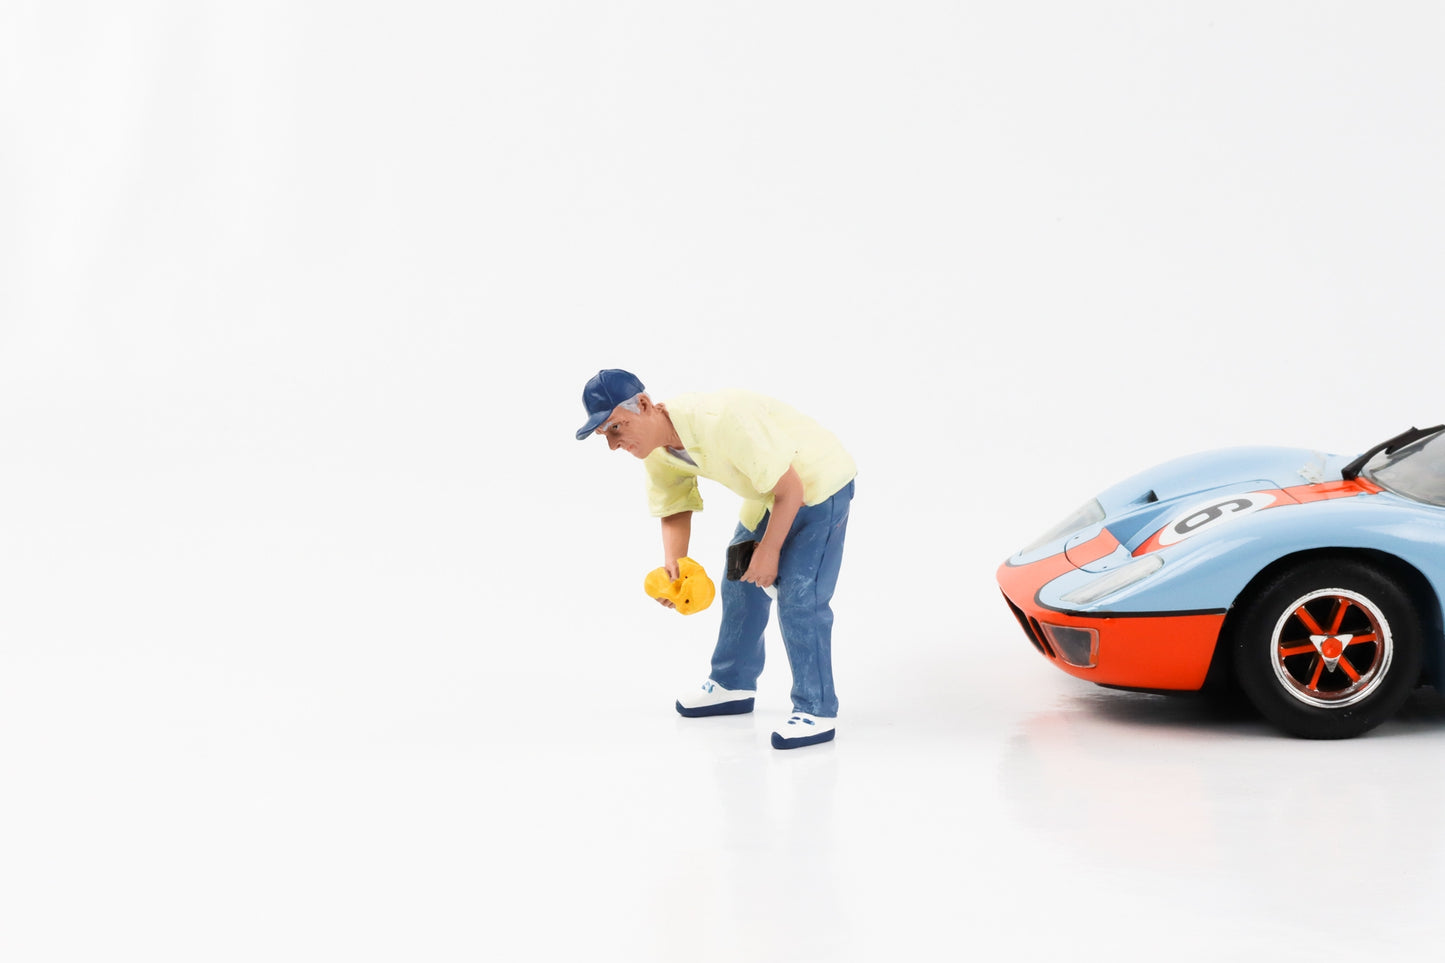 1:18 Figure Weekend Car Show Polisher Man American Diorama VI Figures